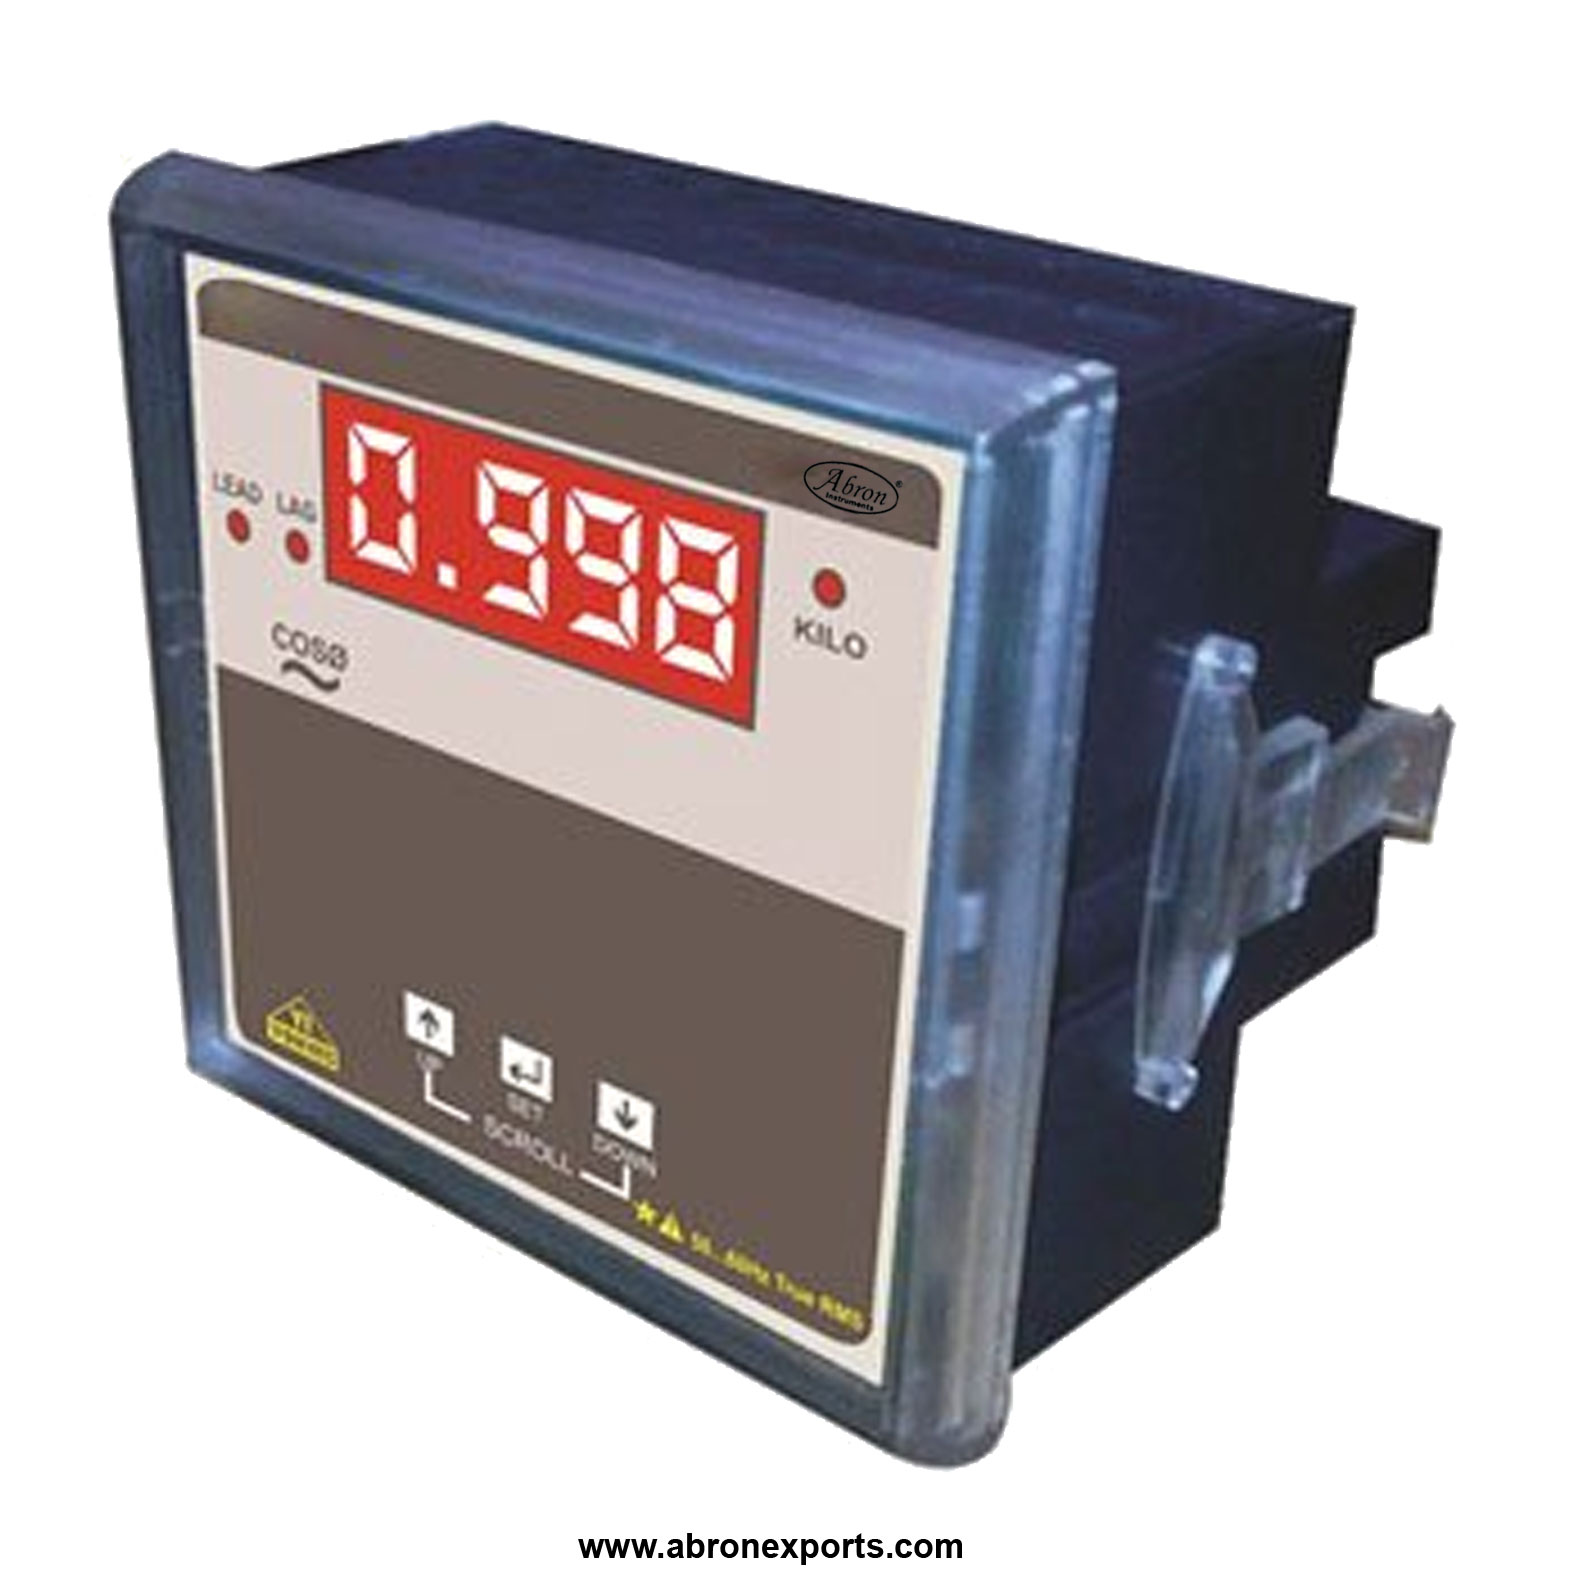 Power Factor Energy Meter Single Phase Digital Panel Mounting 5 Amp 96mm/144mm AE-1325D1